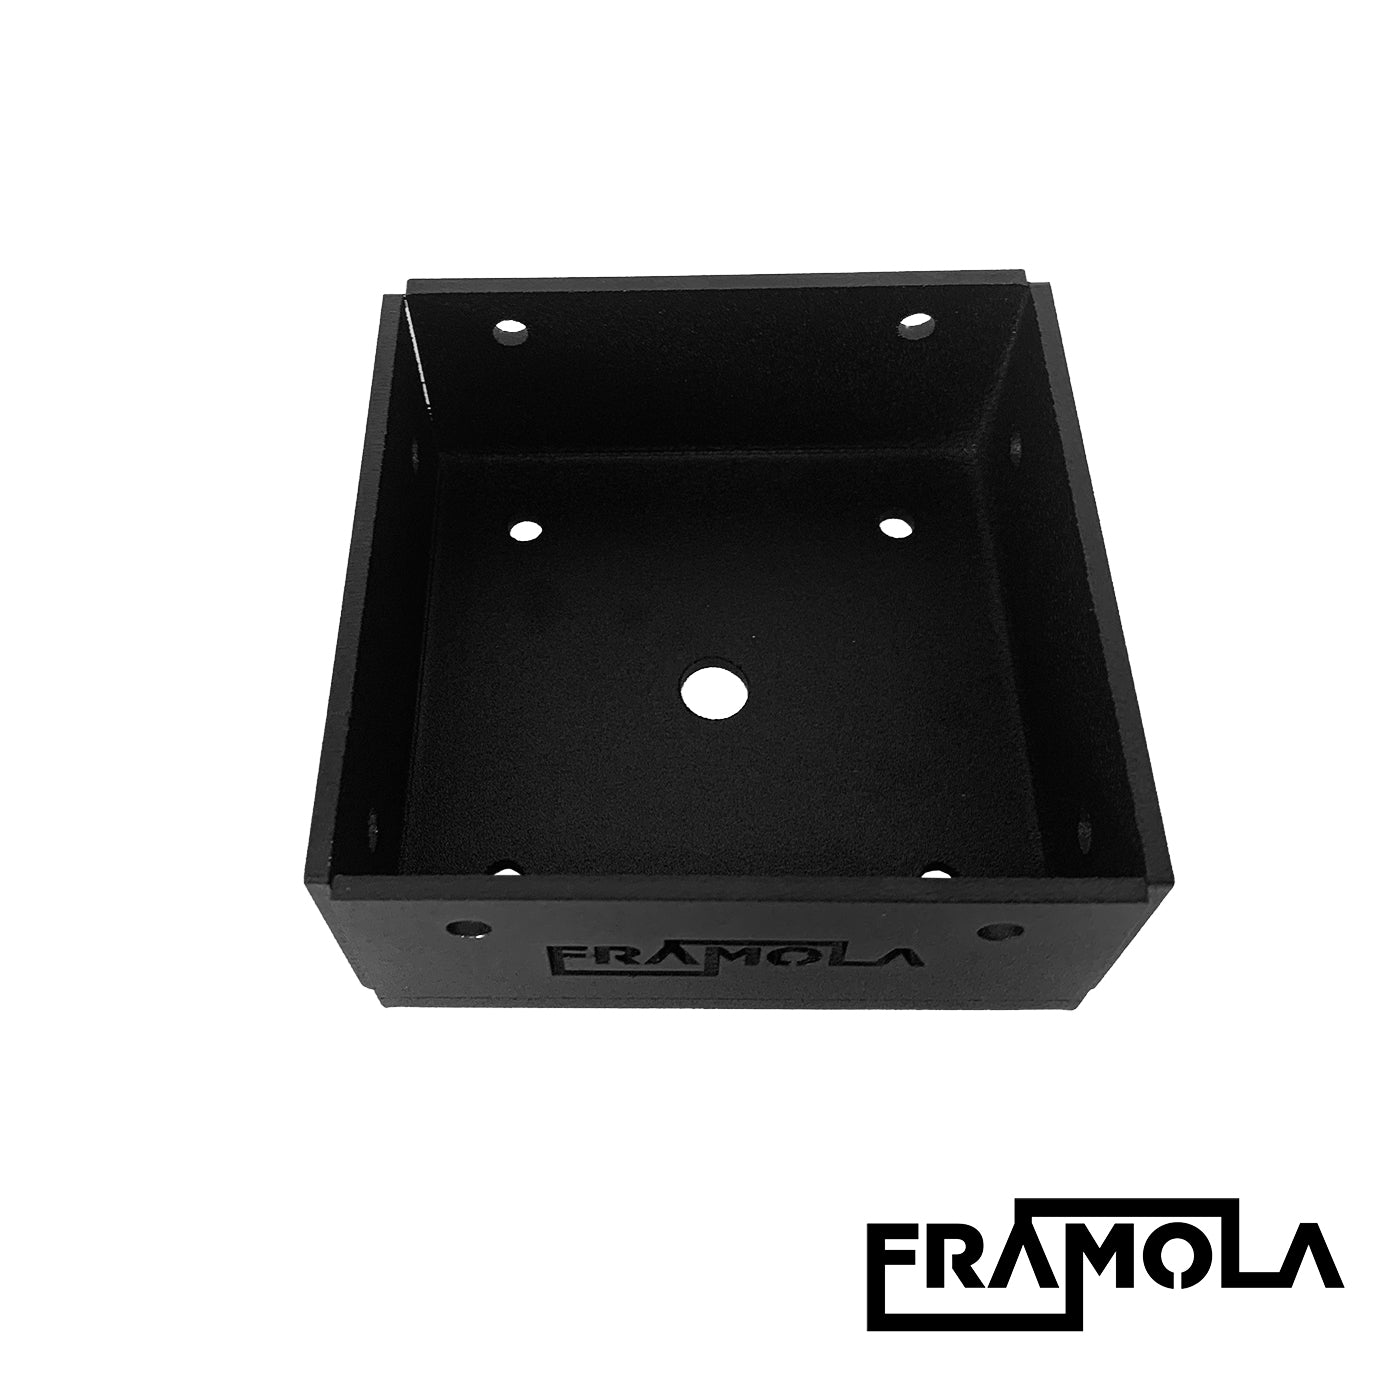 Framola™ 2 Bay Pergola Construction Bracket Kit "B" | Indoor Outdoors